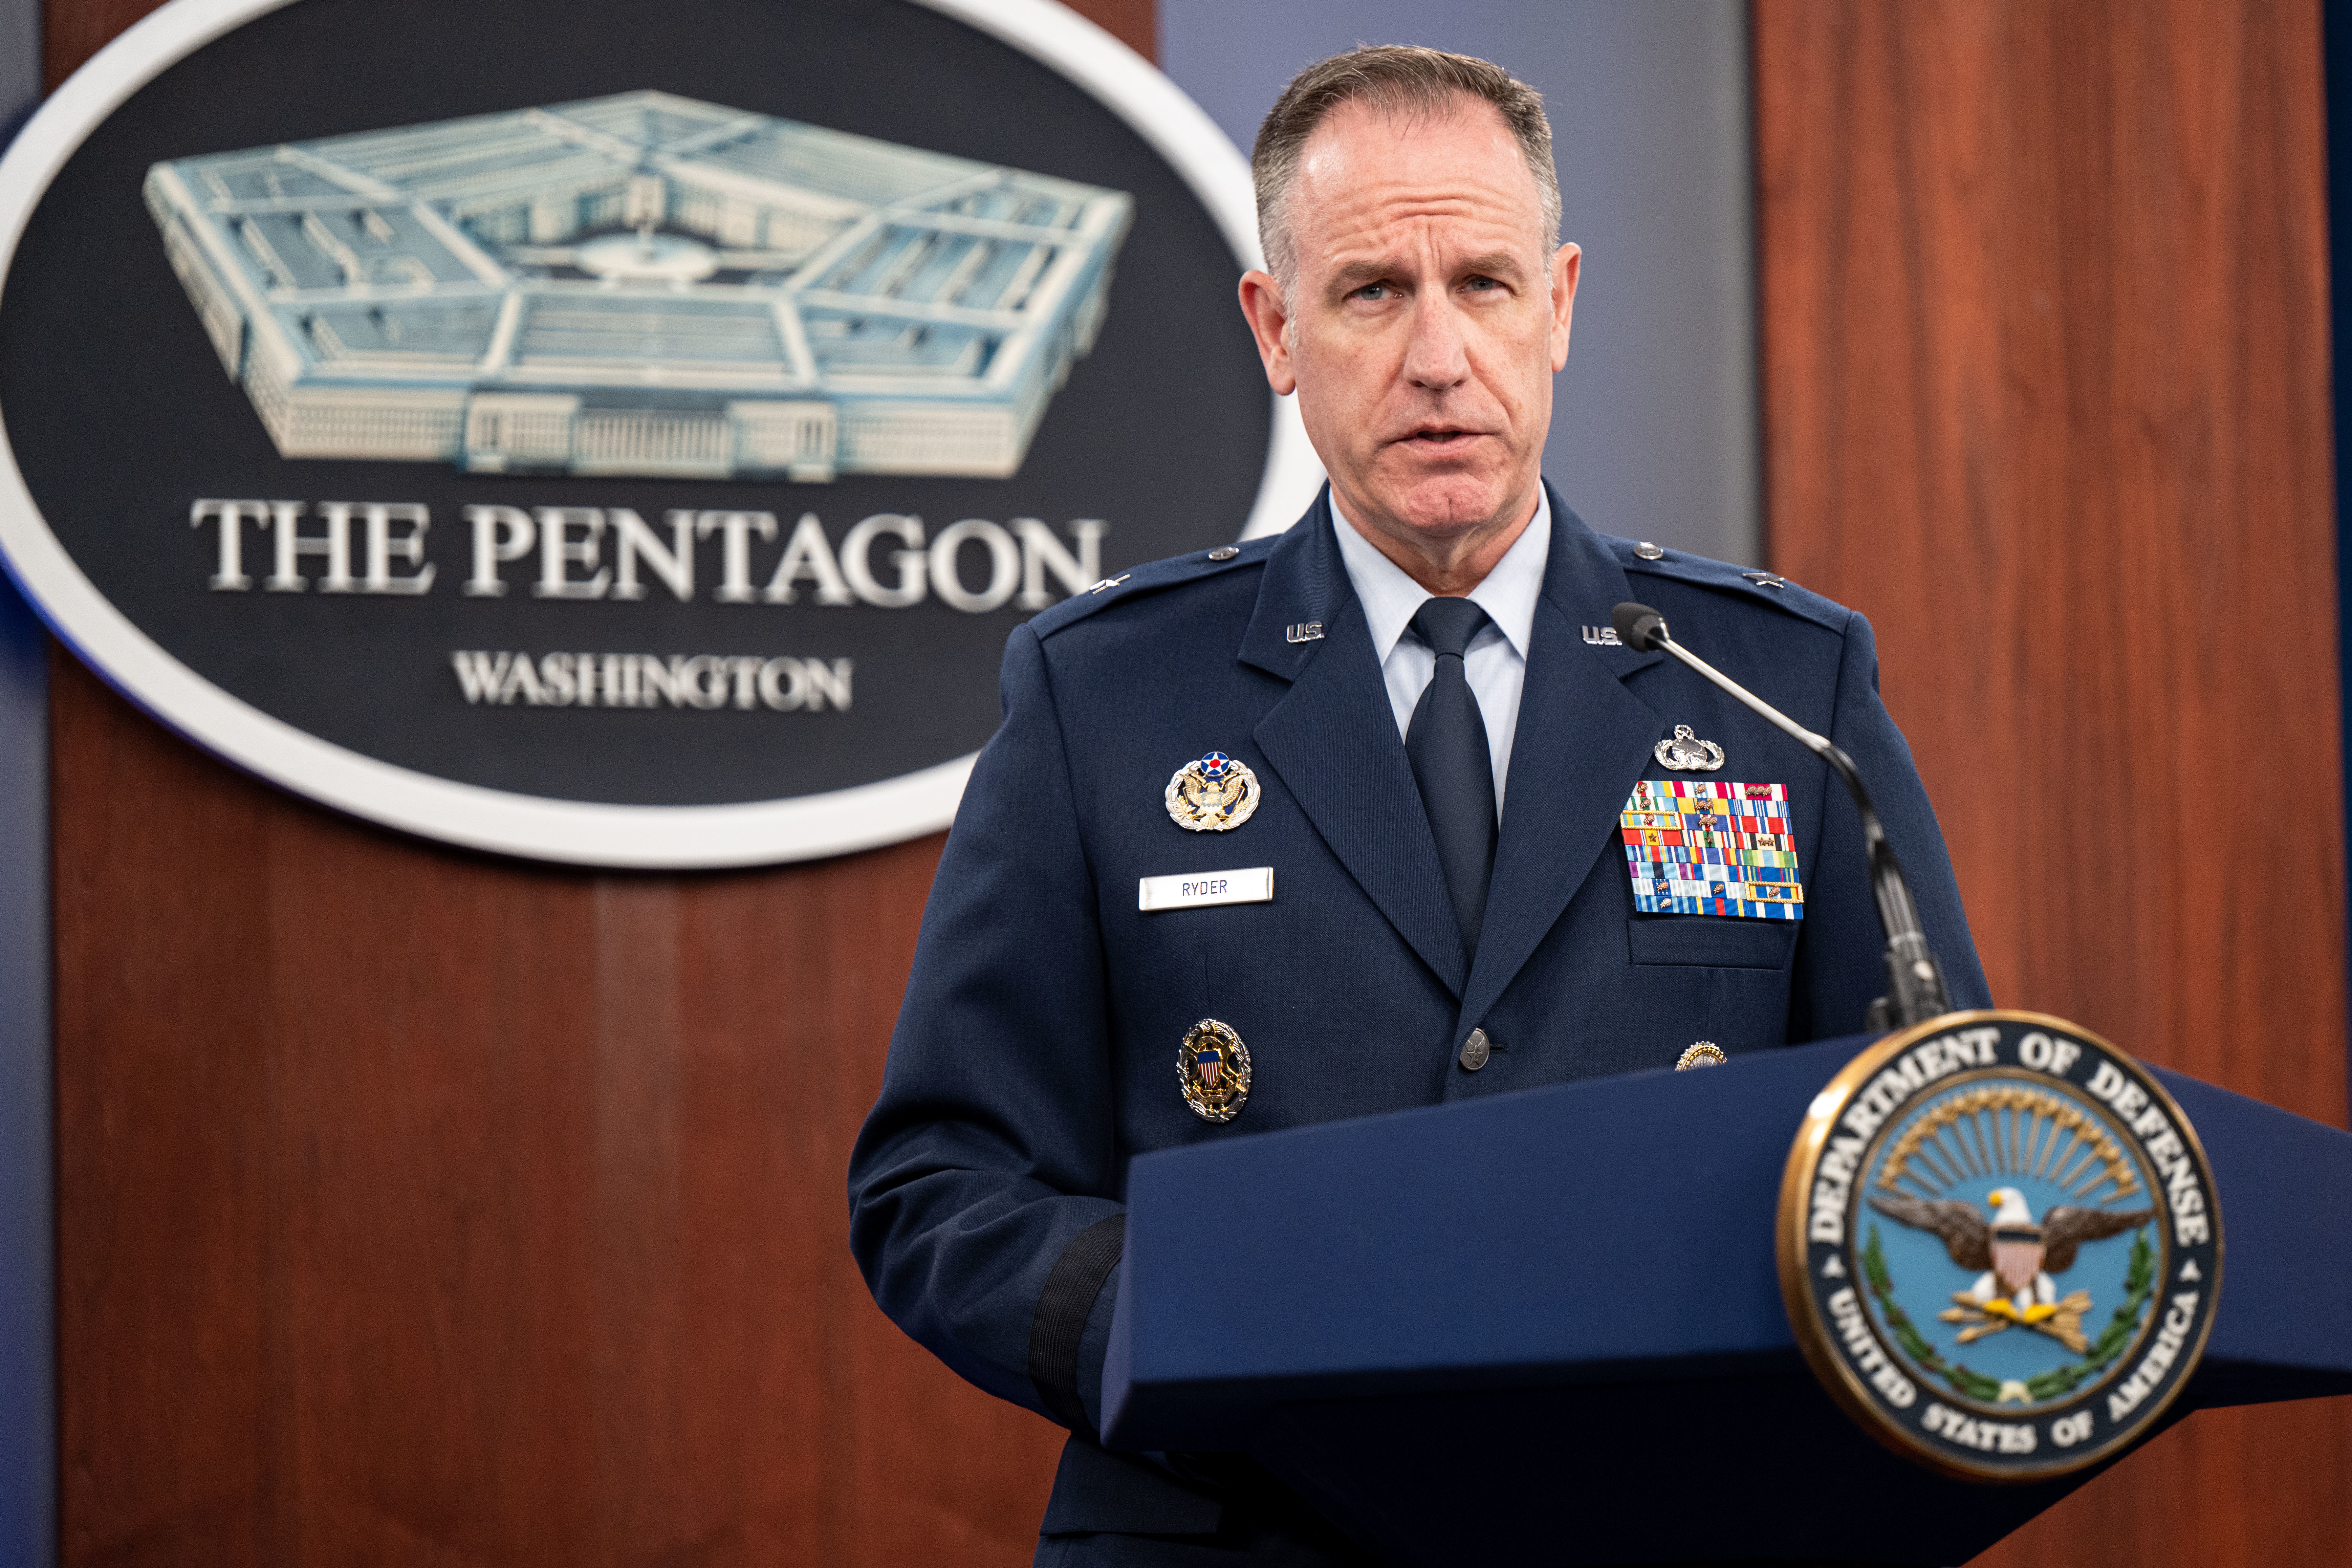 Pentagon Press Secretary Air Force Brigadier General Pat Ryder